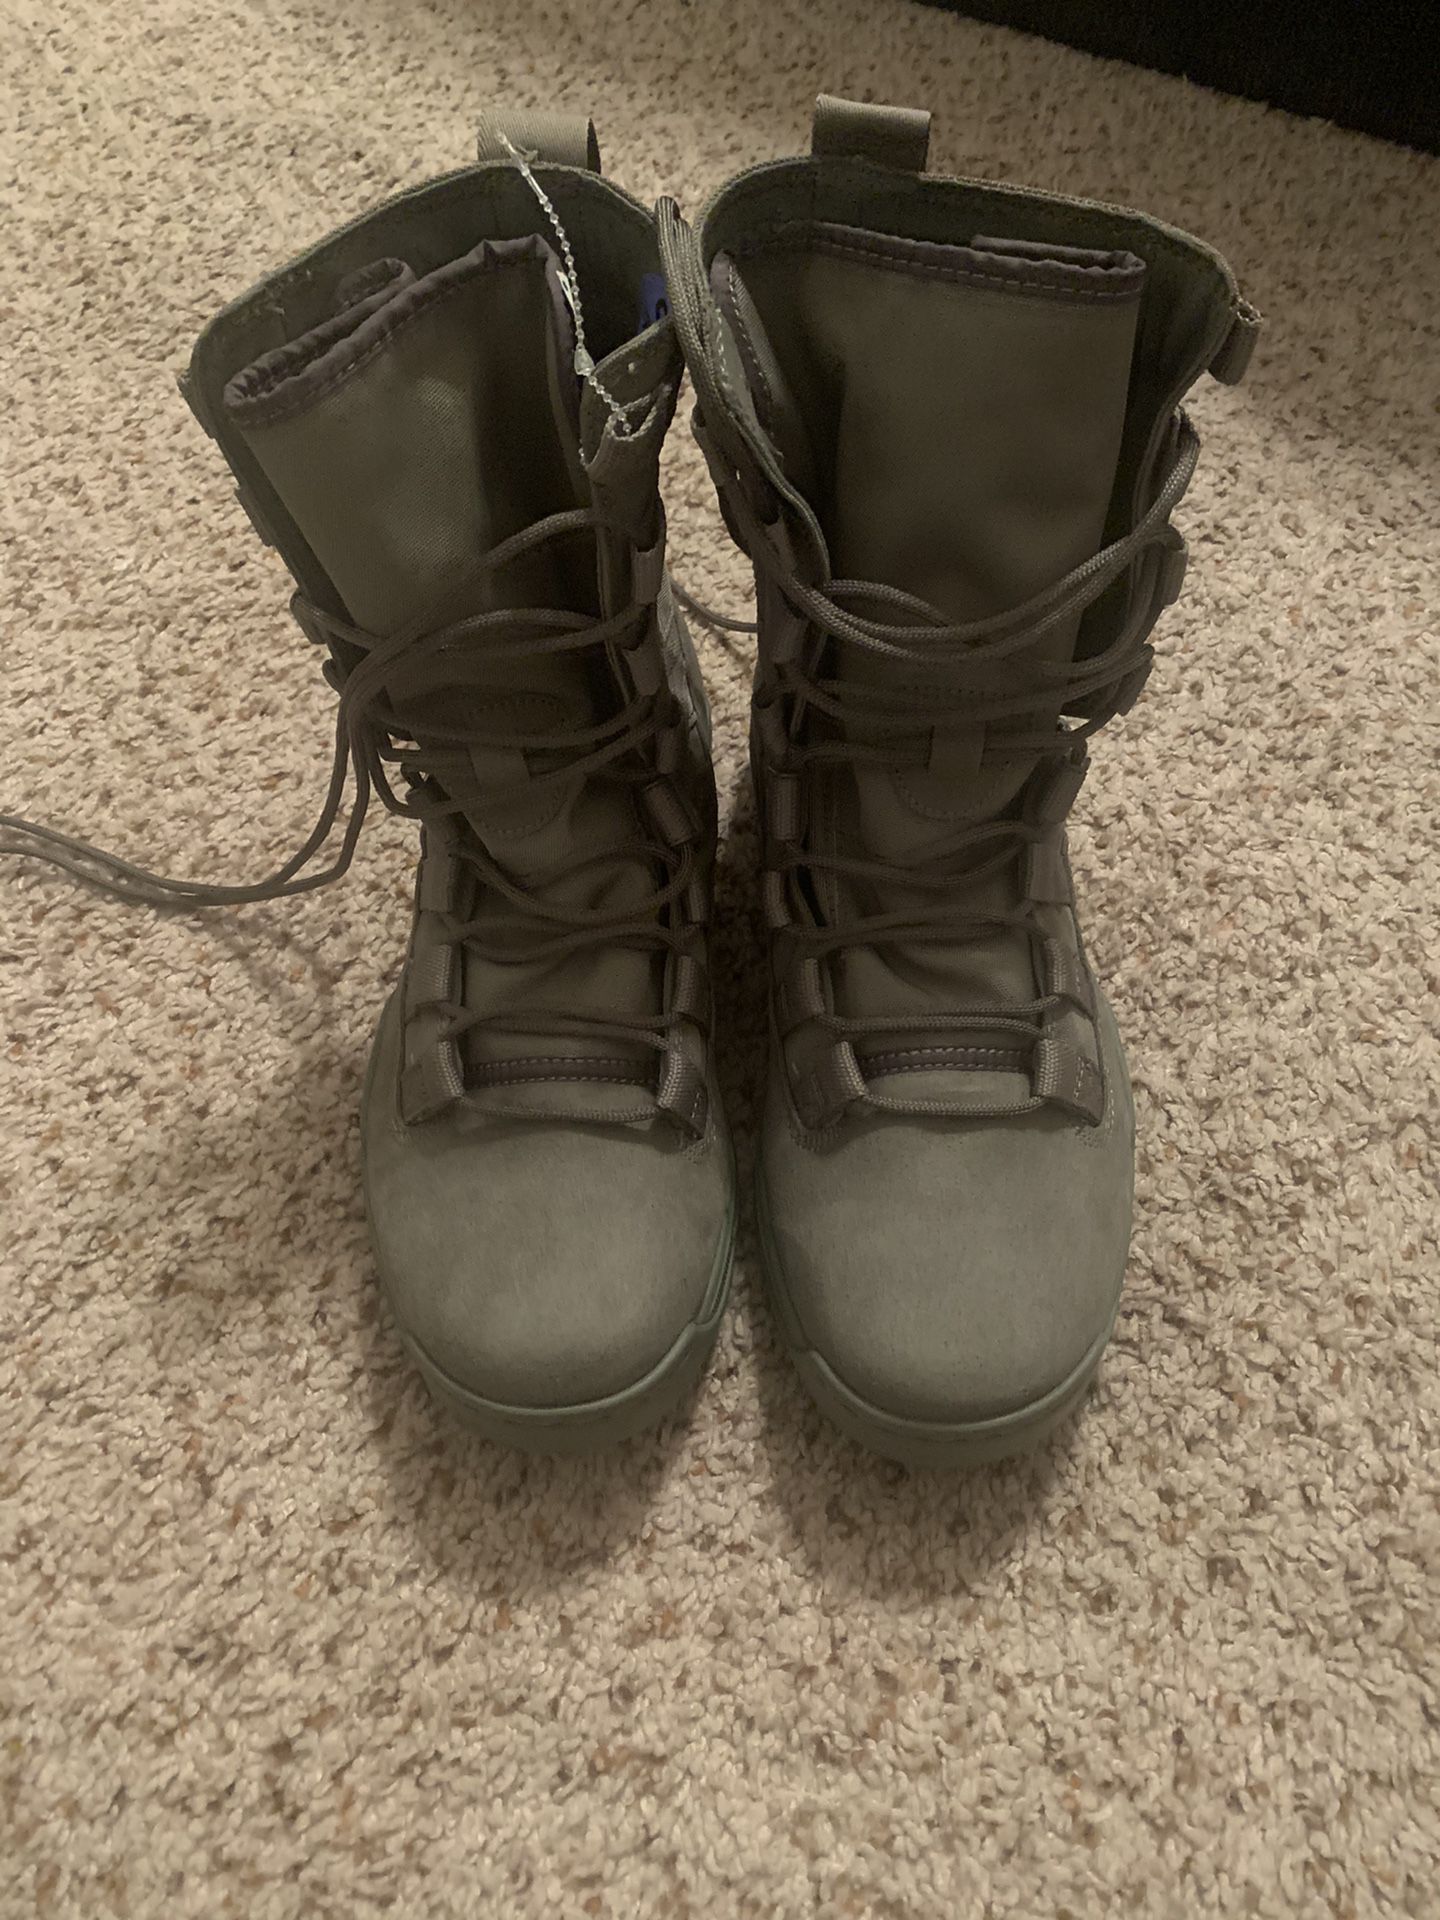 Nike SFB Gen 2 Combat Boots 8’ ‘Military Sage’ Size 8.5